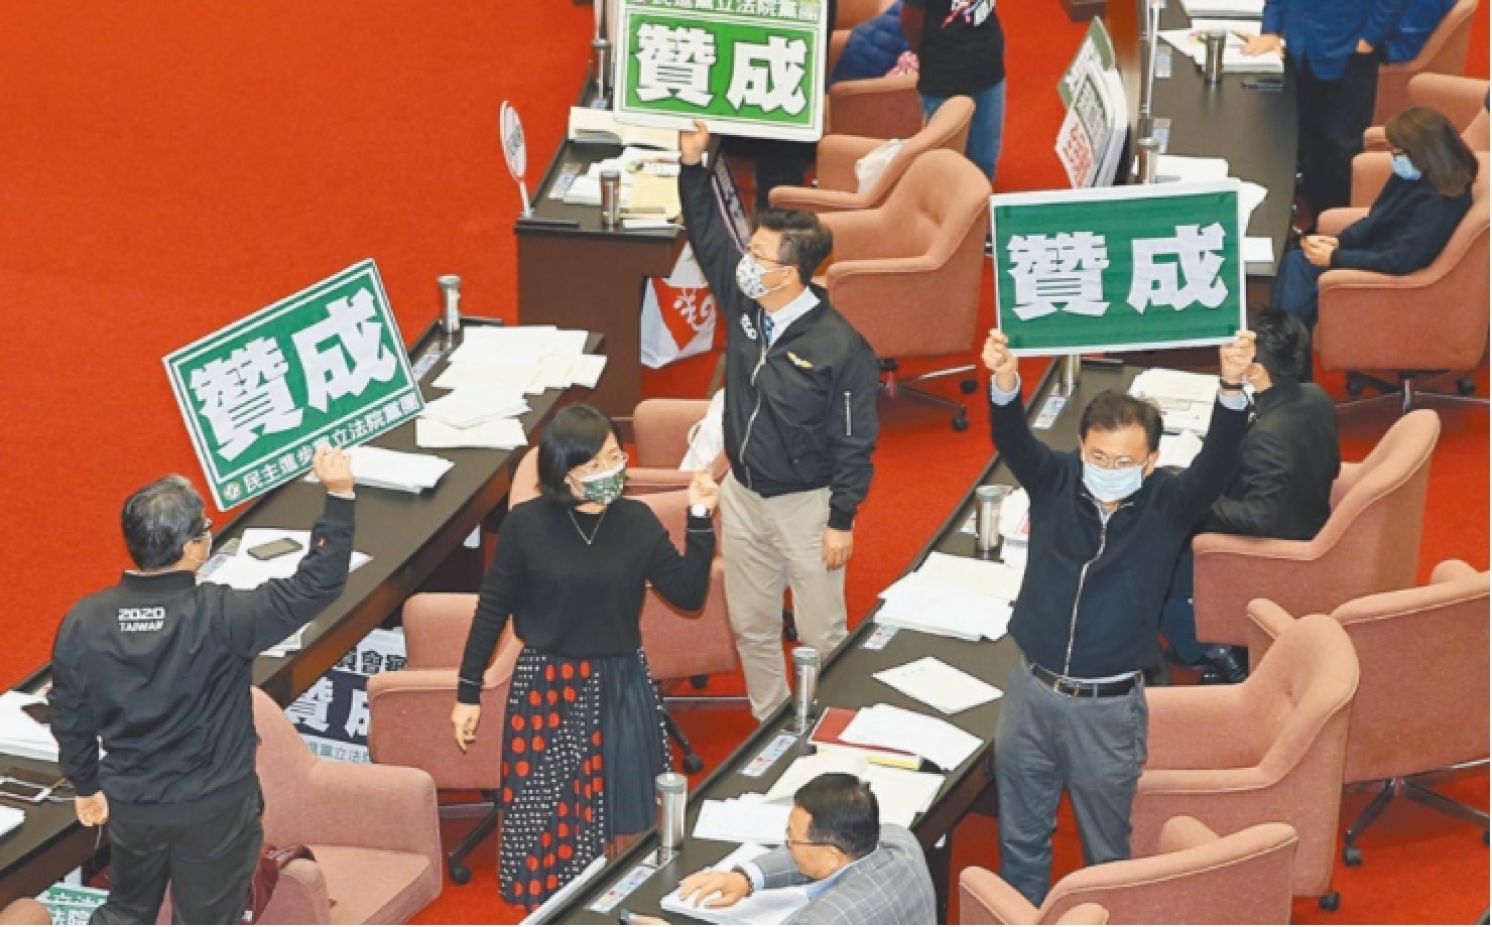 Ractopamine Pork: DPP Wins Legislative Battle, KMT to Challenge By Recall and Referendum